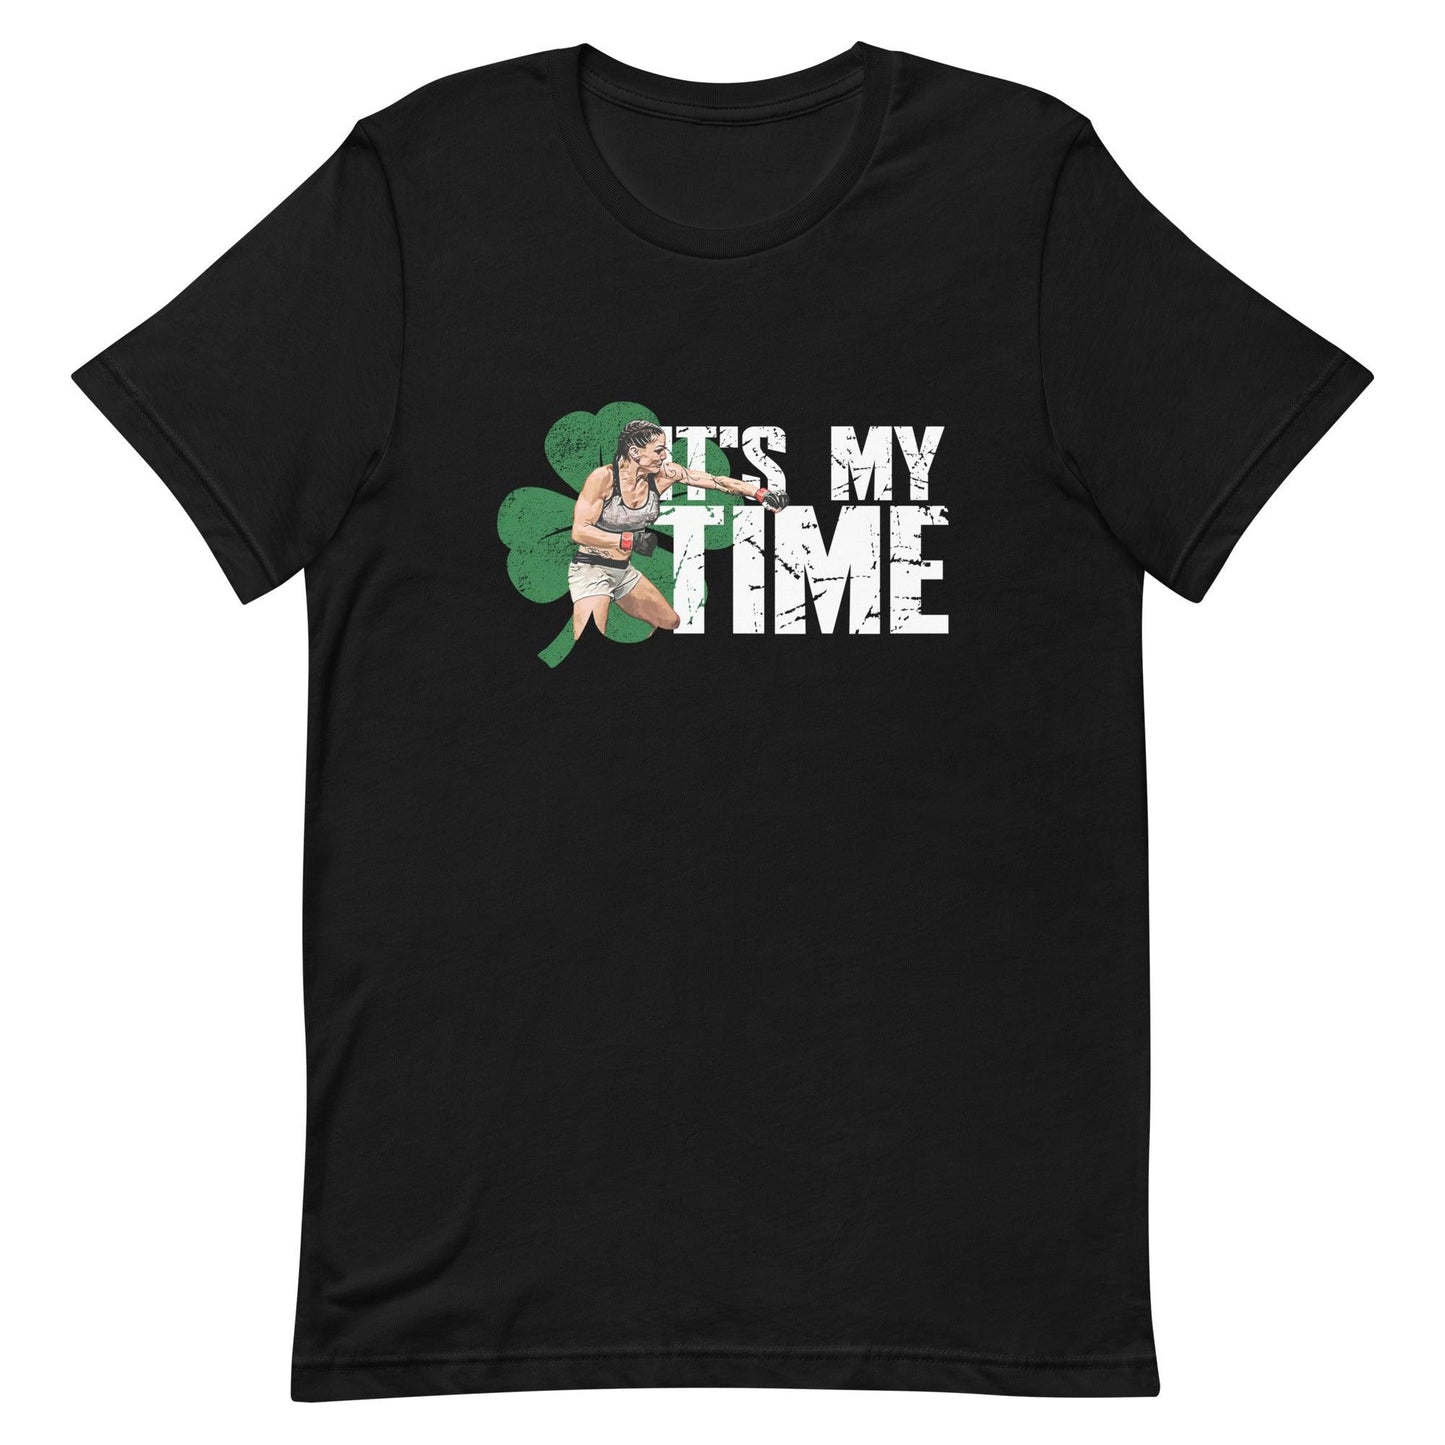 Lauren Murphy "Its My Time" t-shirt - Fan Arch